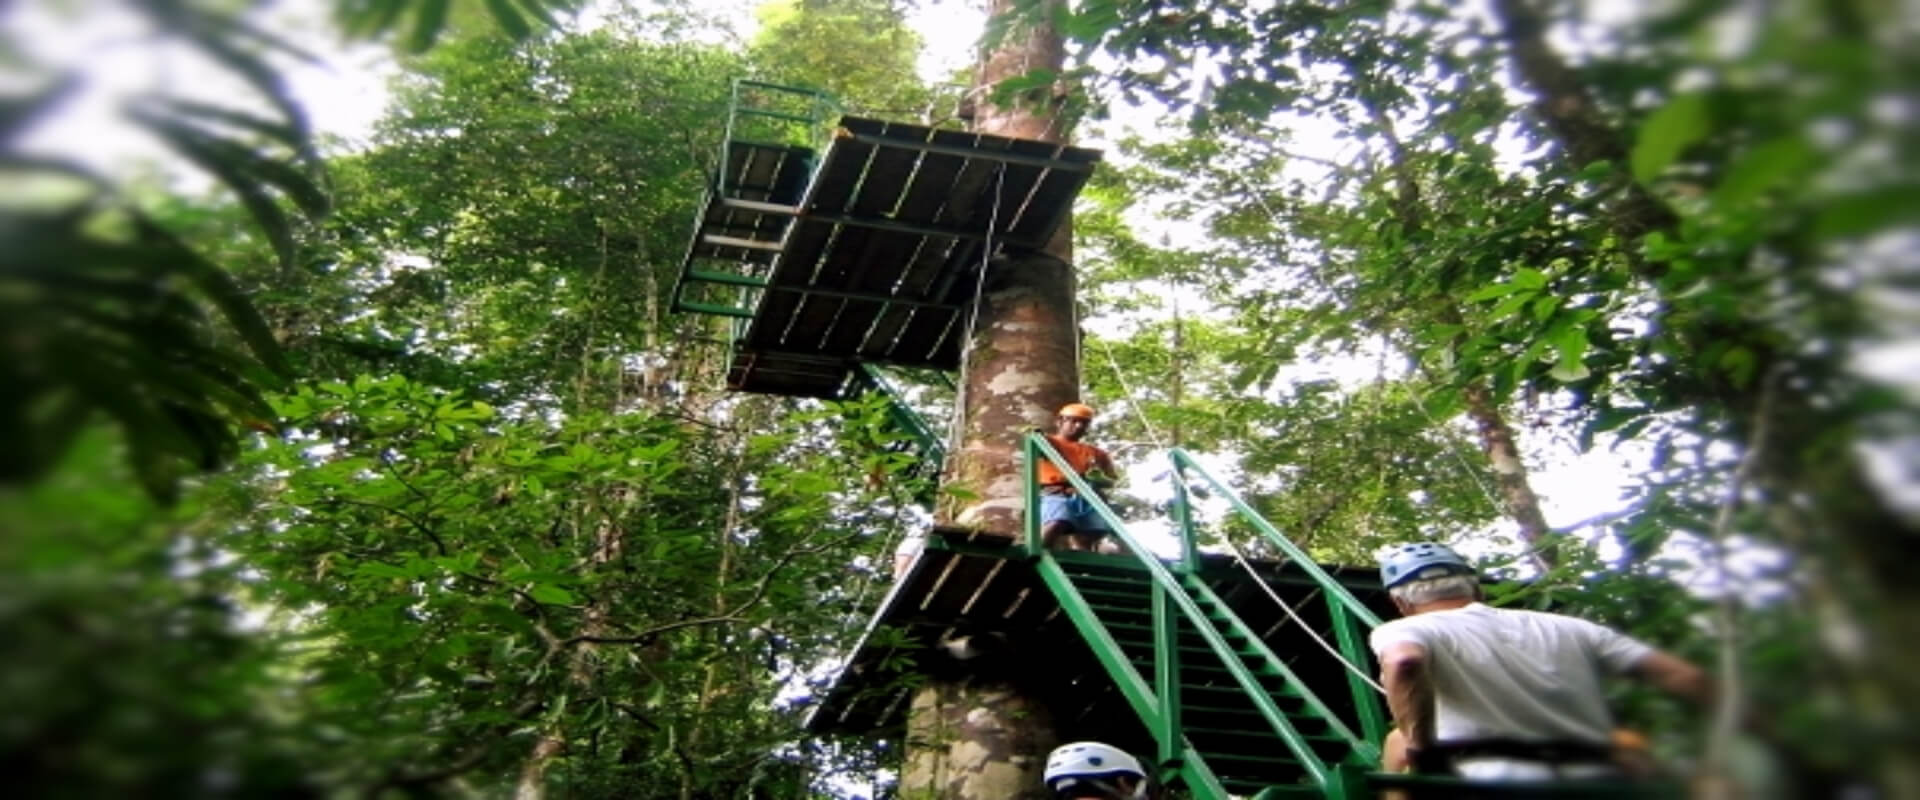 Drake Bay Canopy Tour | Costa Rica Jade Tours